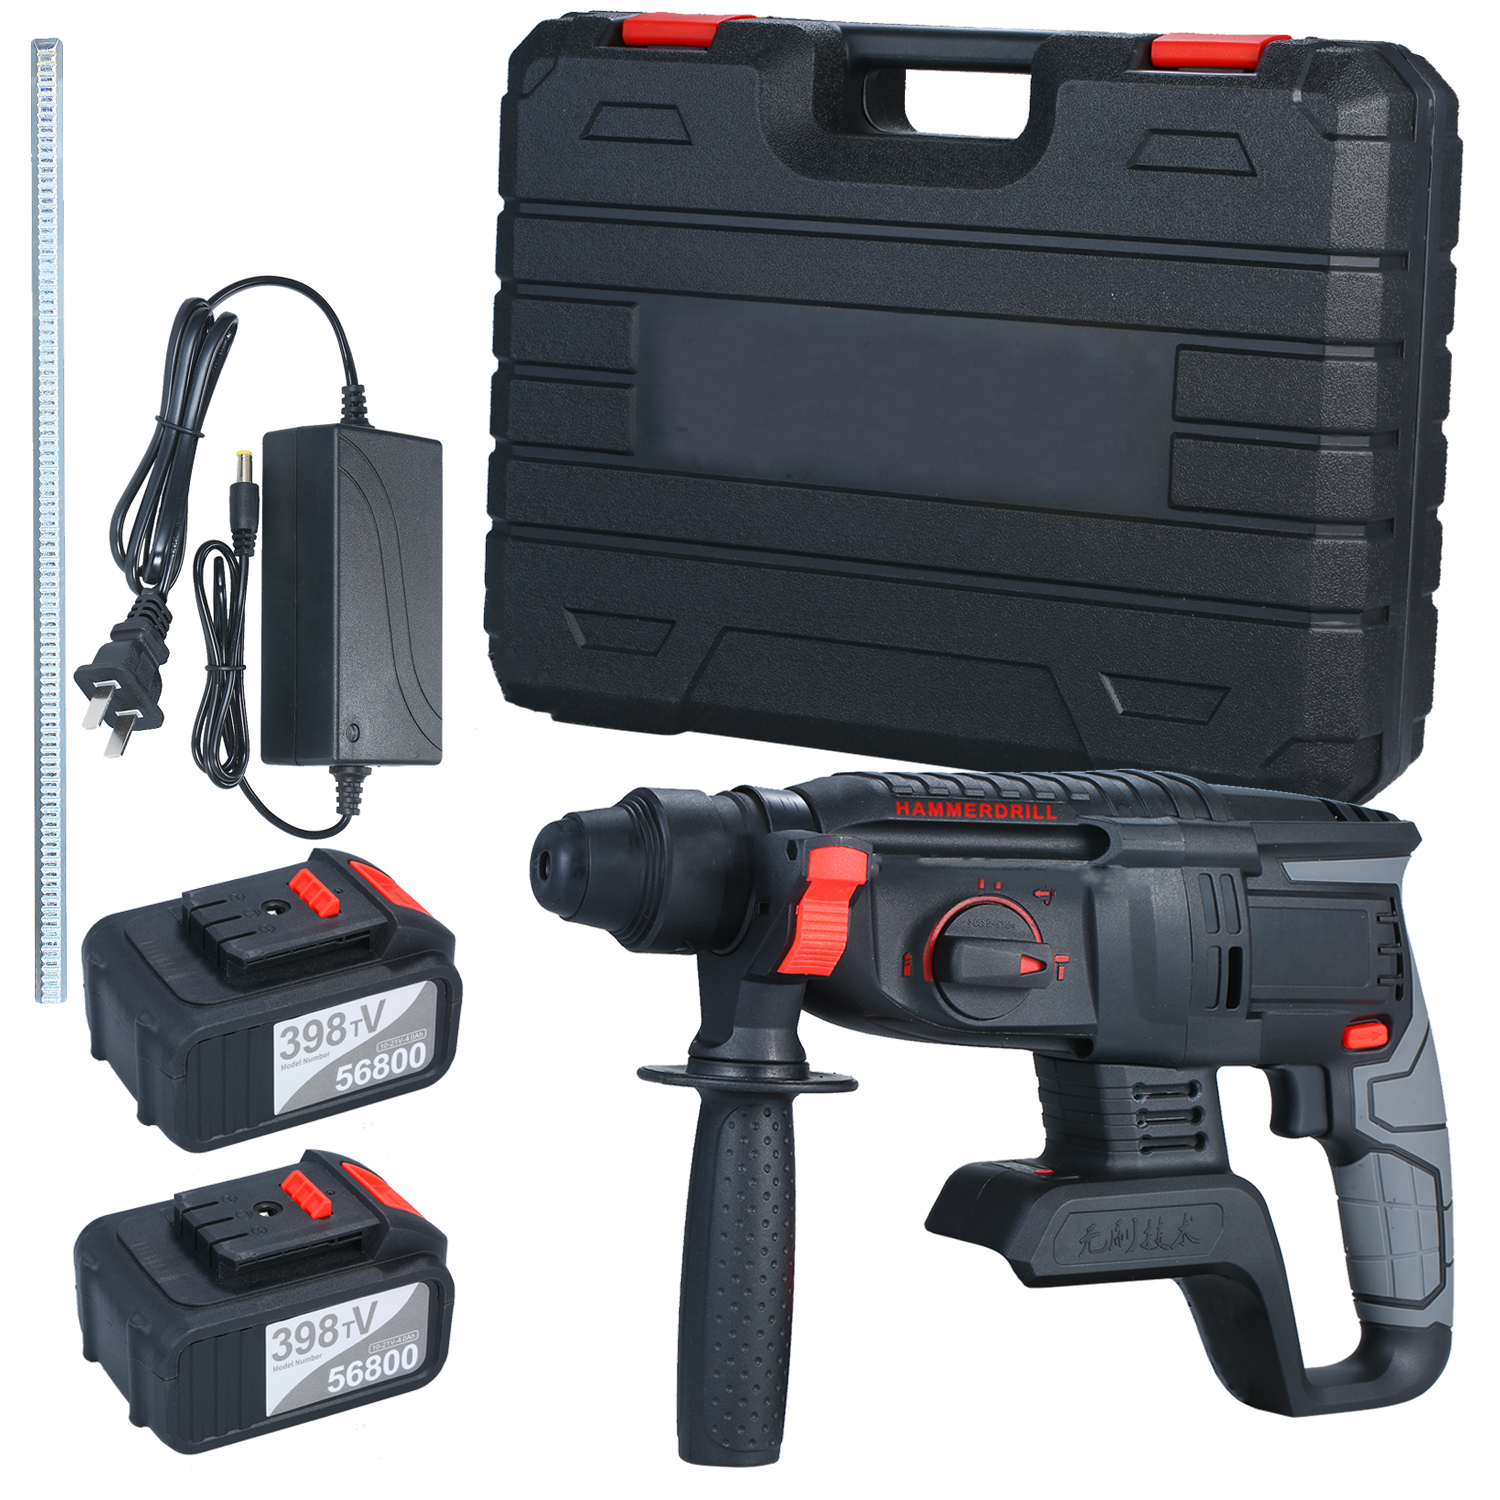 Impact Drill Brushless Heavy Duty Hammer Drill SDS-plus Adjustabl Grip 980 RPM Cordless impact Drill Demolition Kit Power Tools